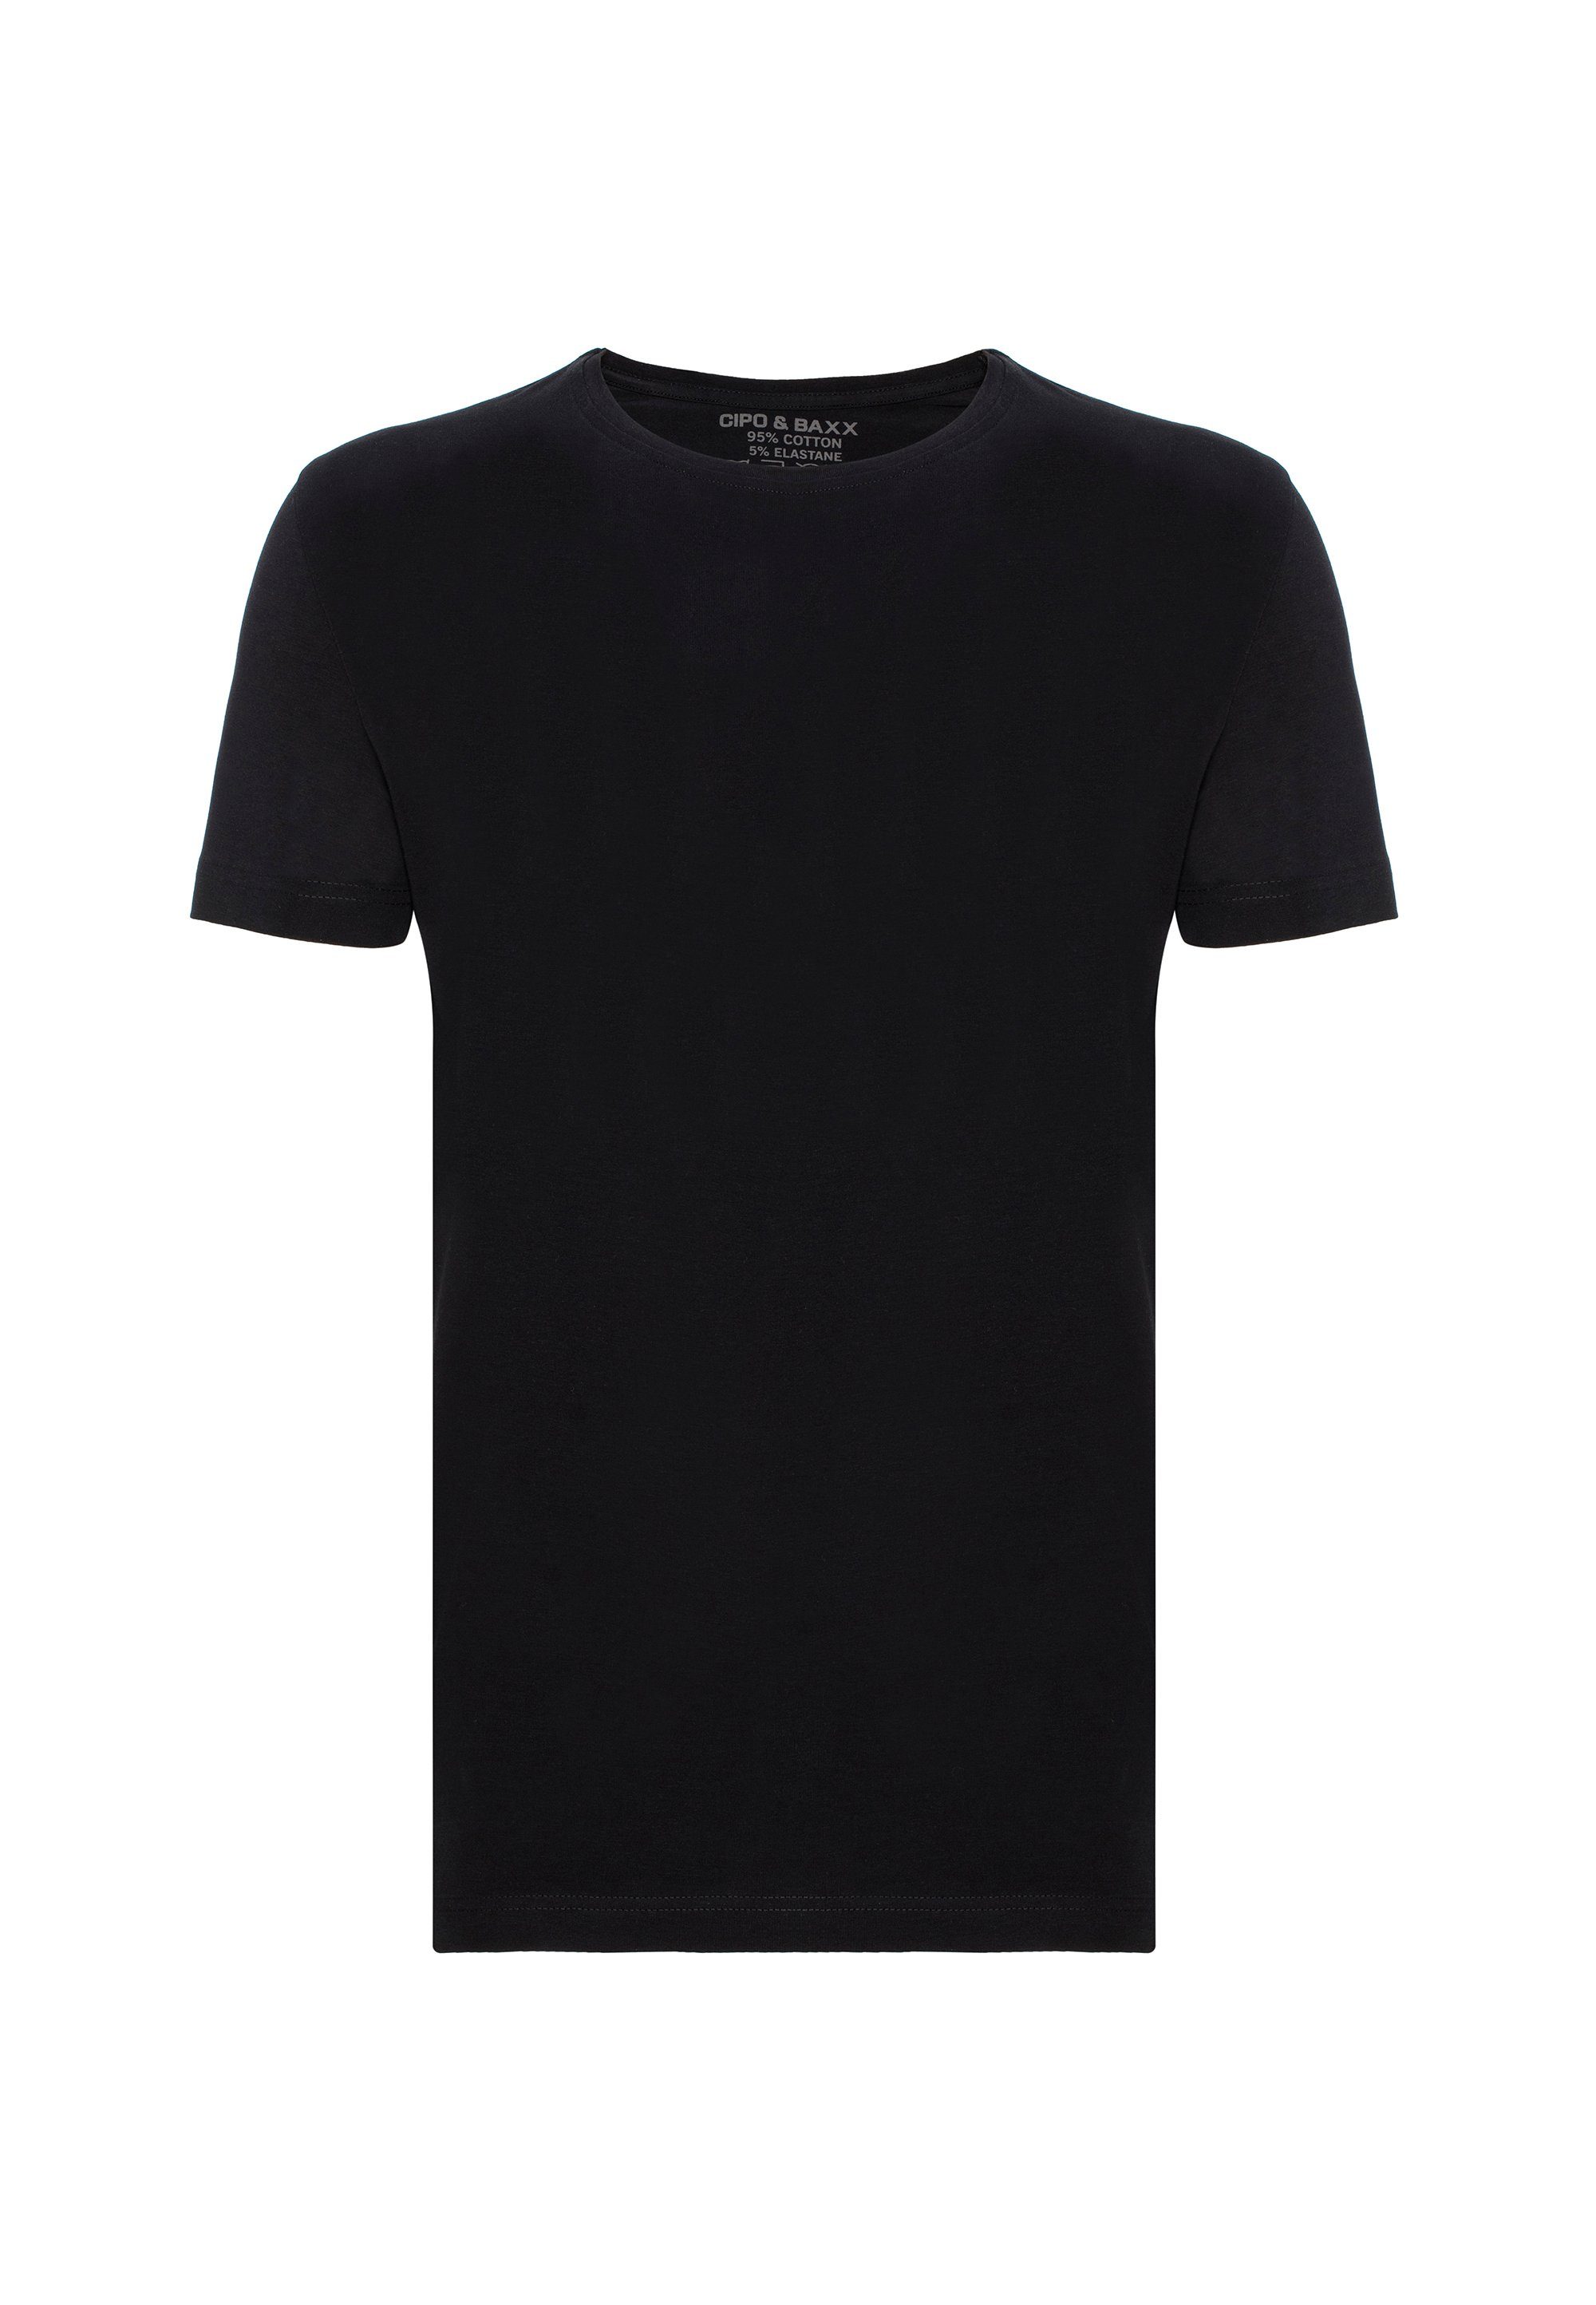 Cipo & Baxx T-Shirt mit modernem Rundhalsausschnitt schwarz